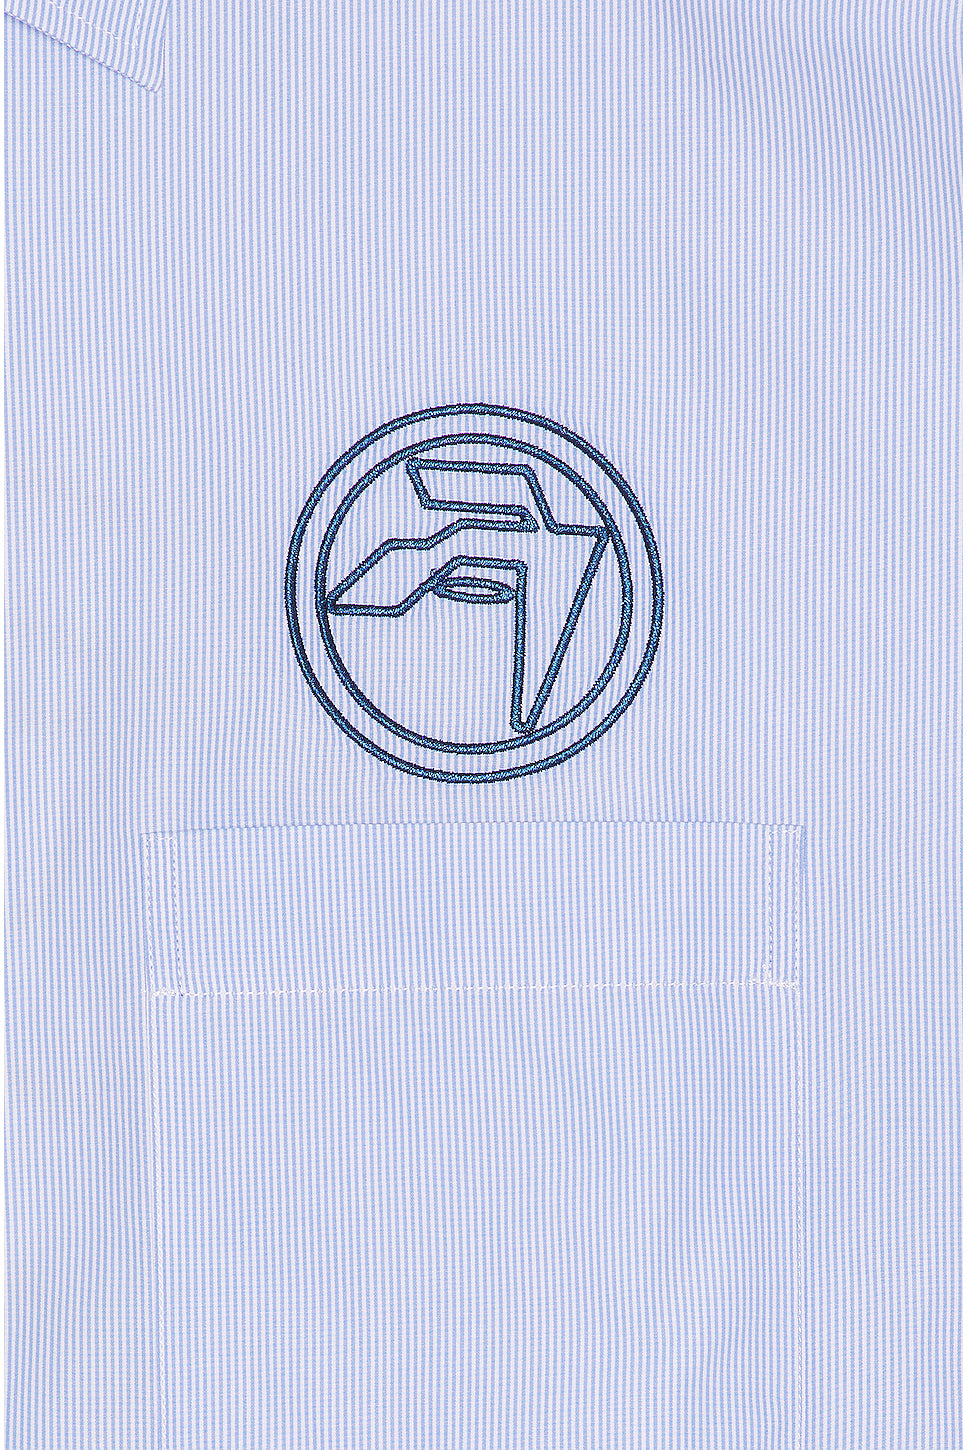 Emblem Striped Short Sleeve Shirt